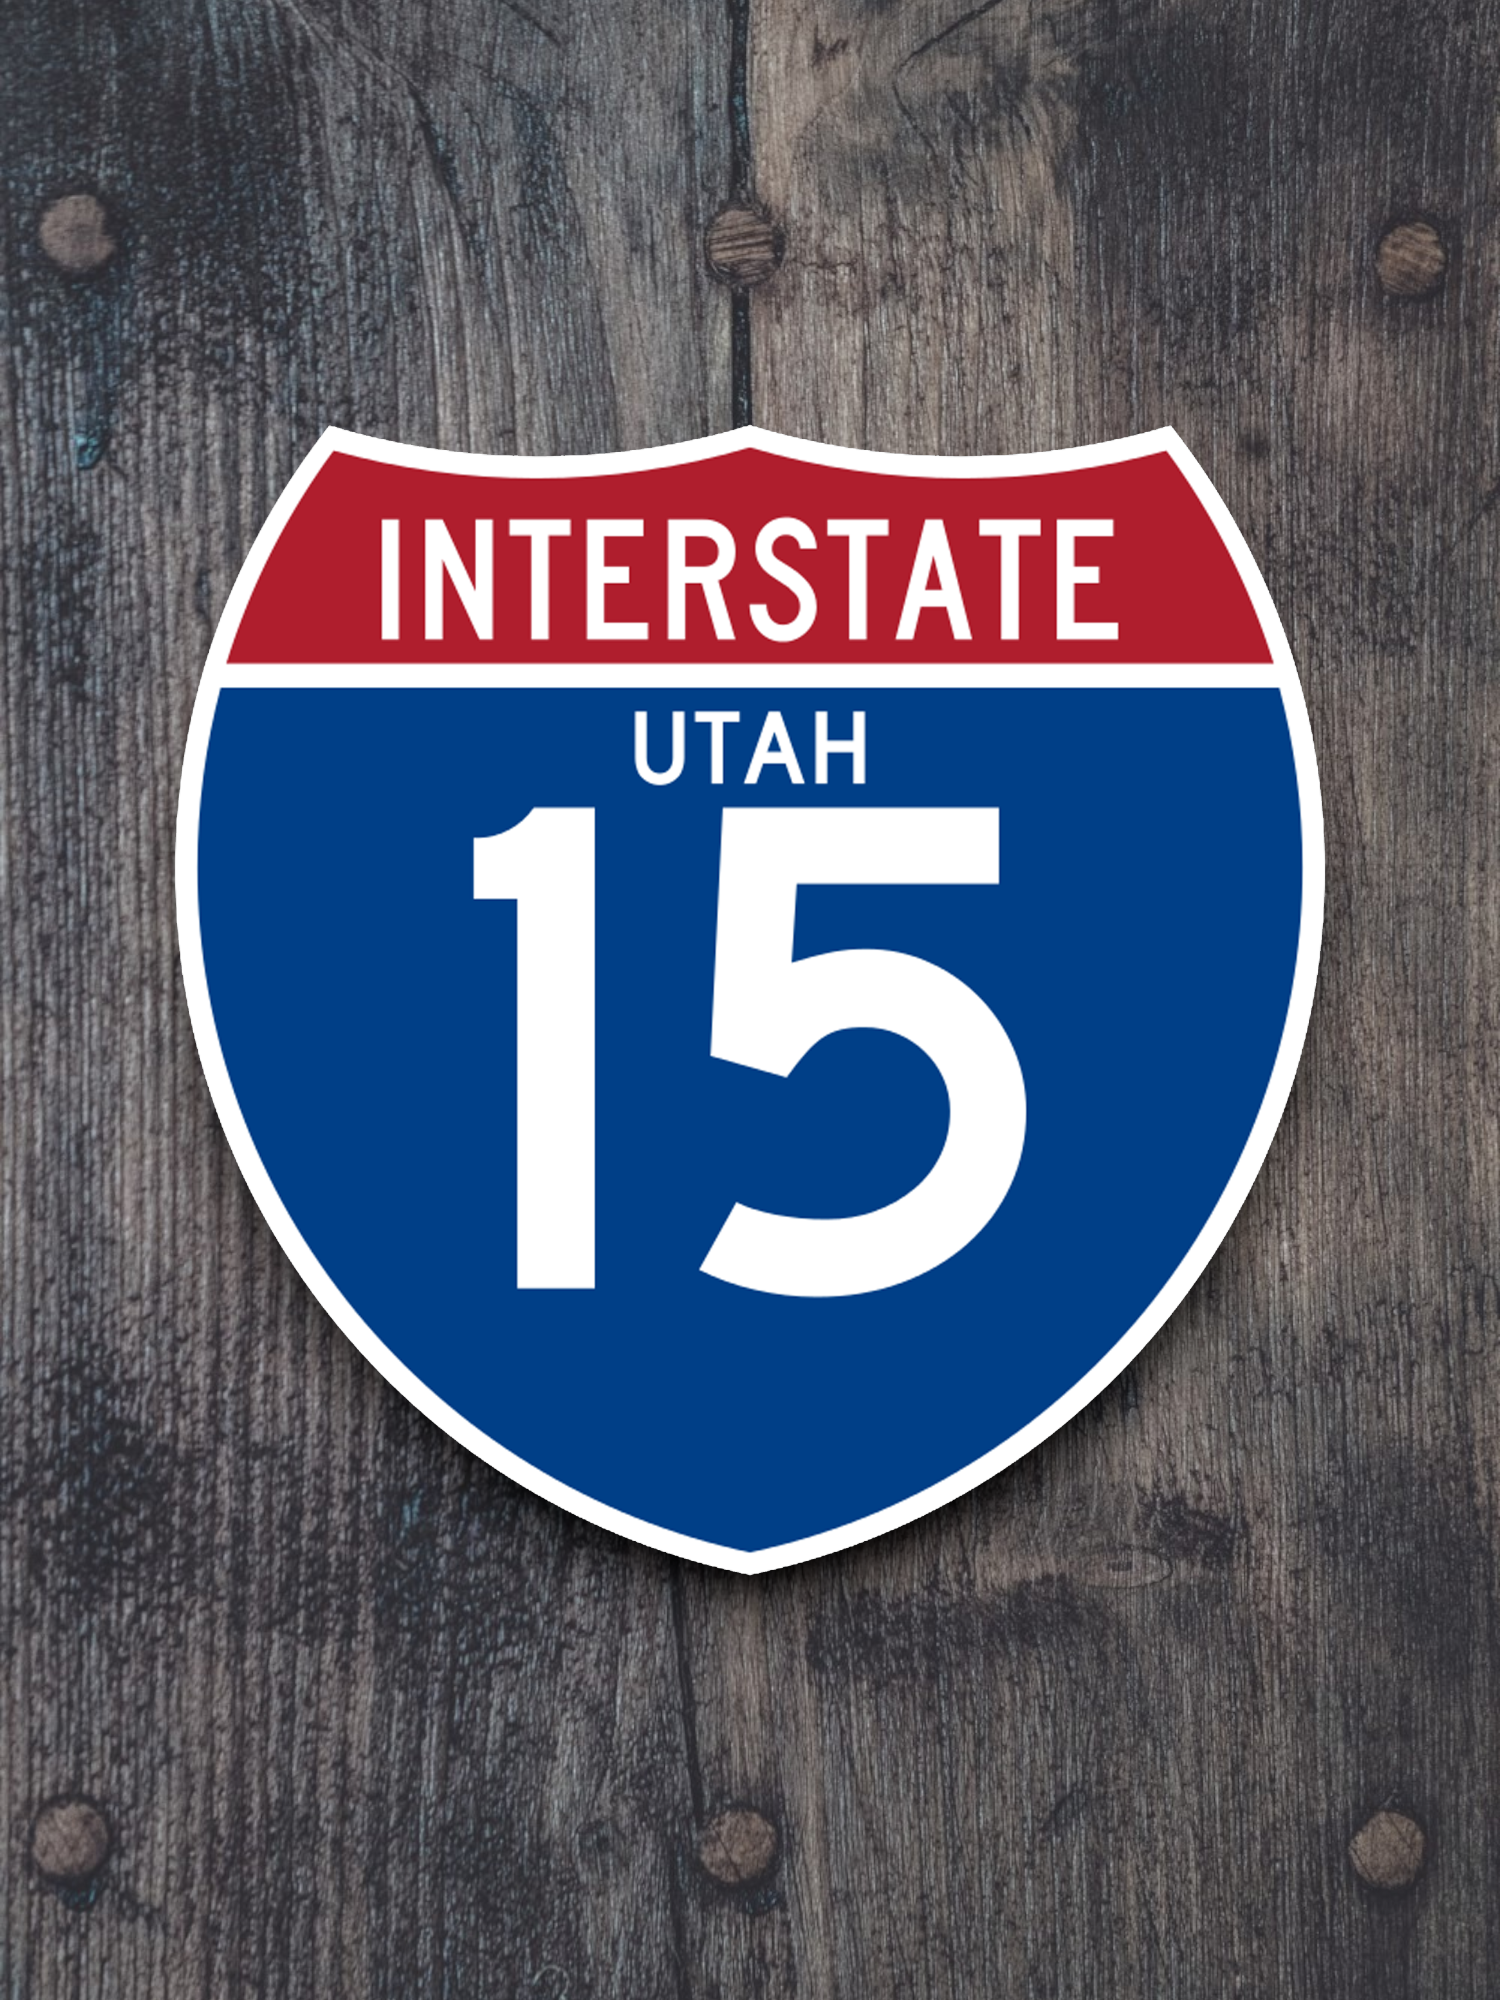 Interstate I-15 Utah - Road Sign Sticker